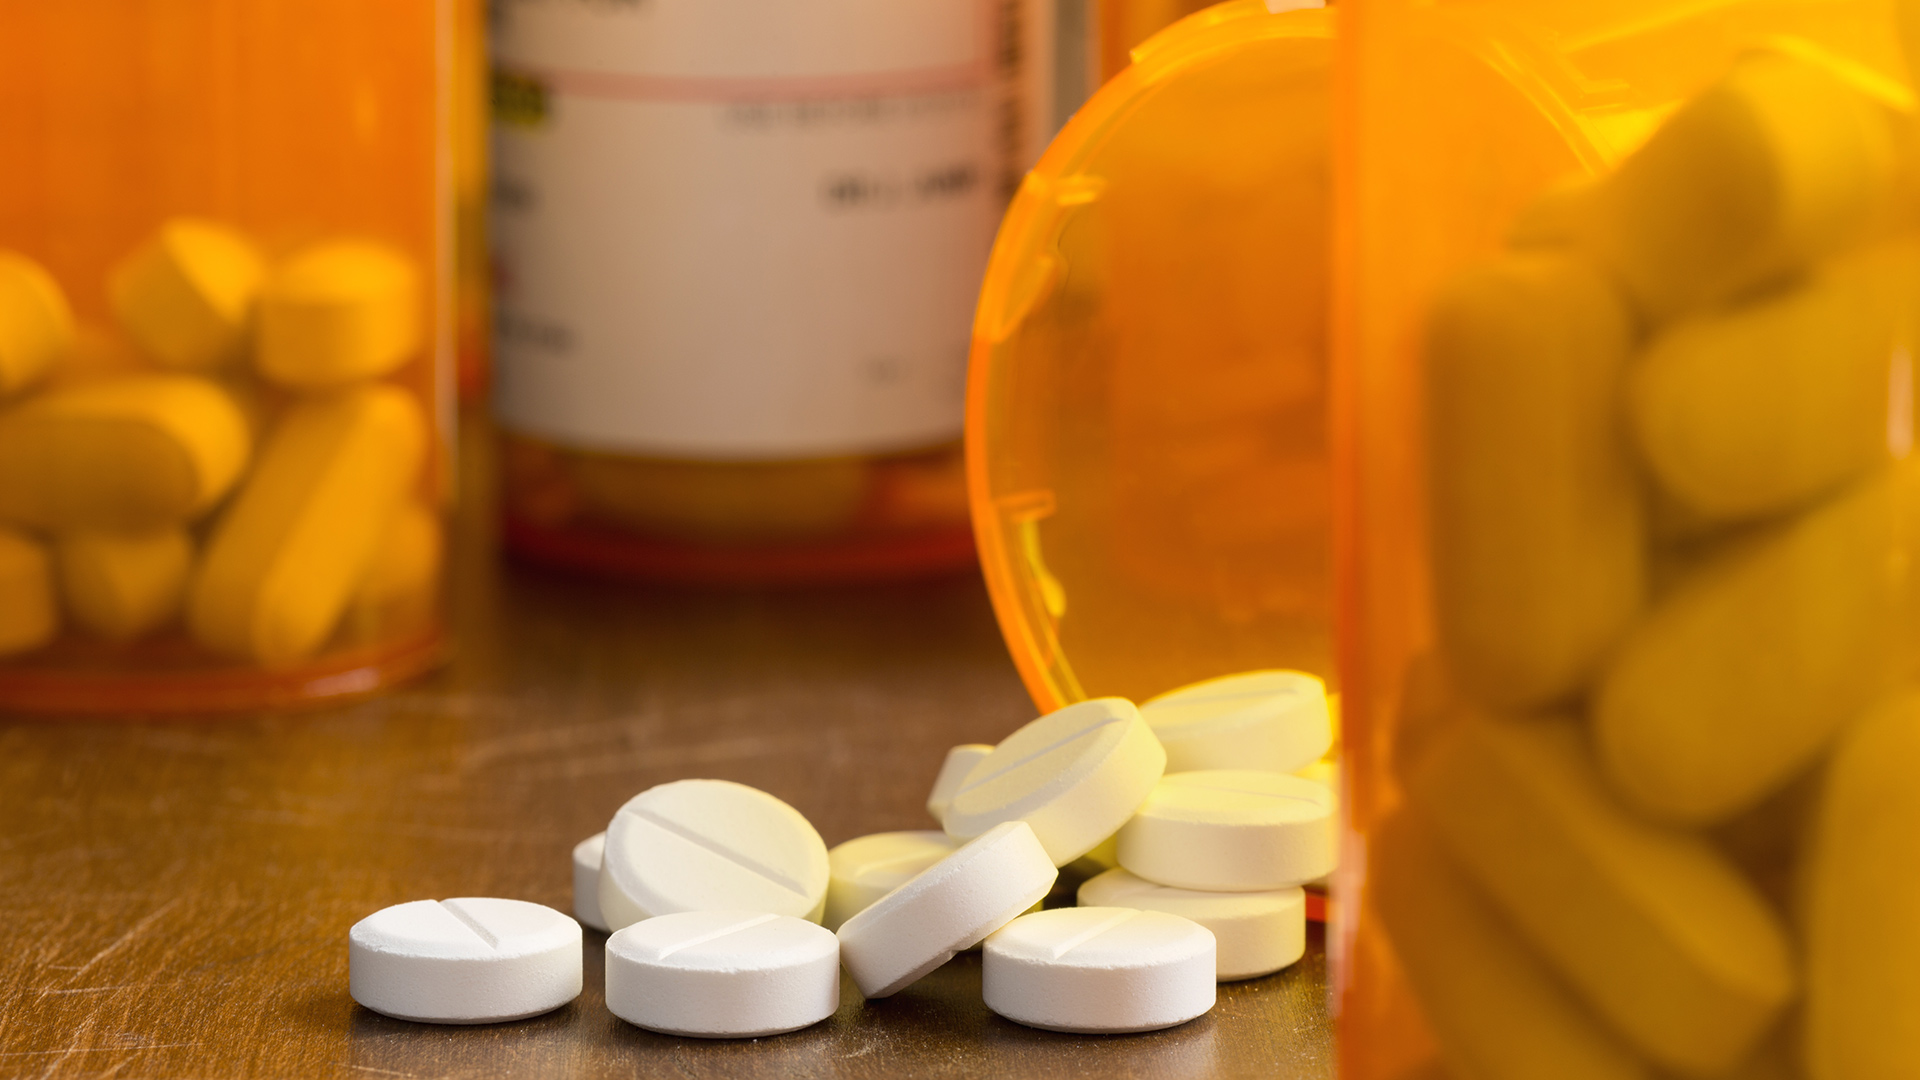 opioids pain medication pills fentanyl hero